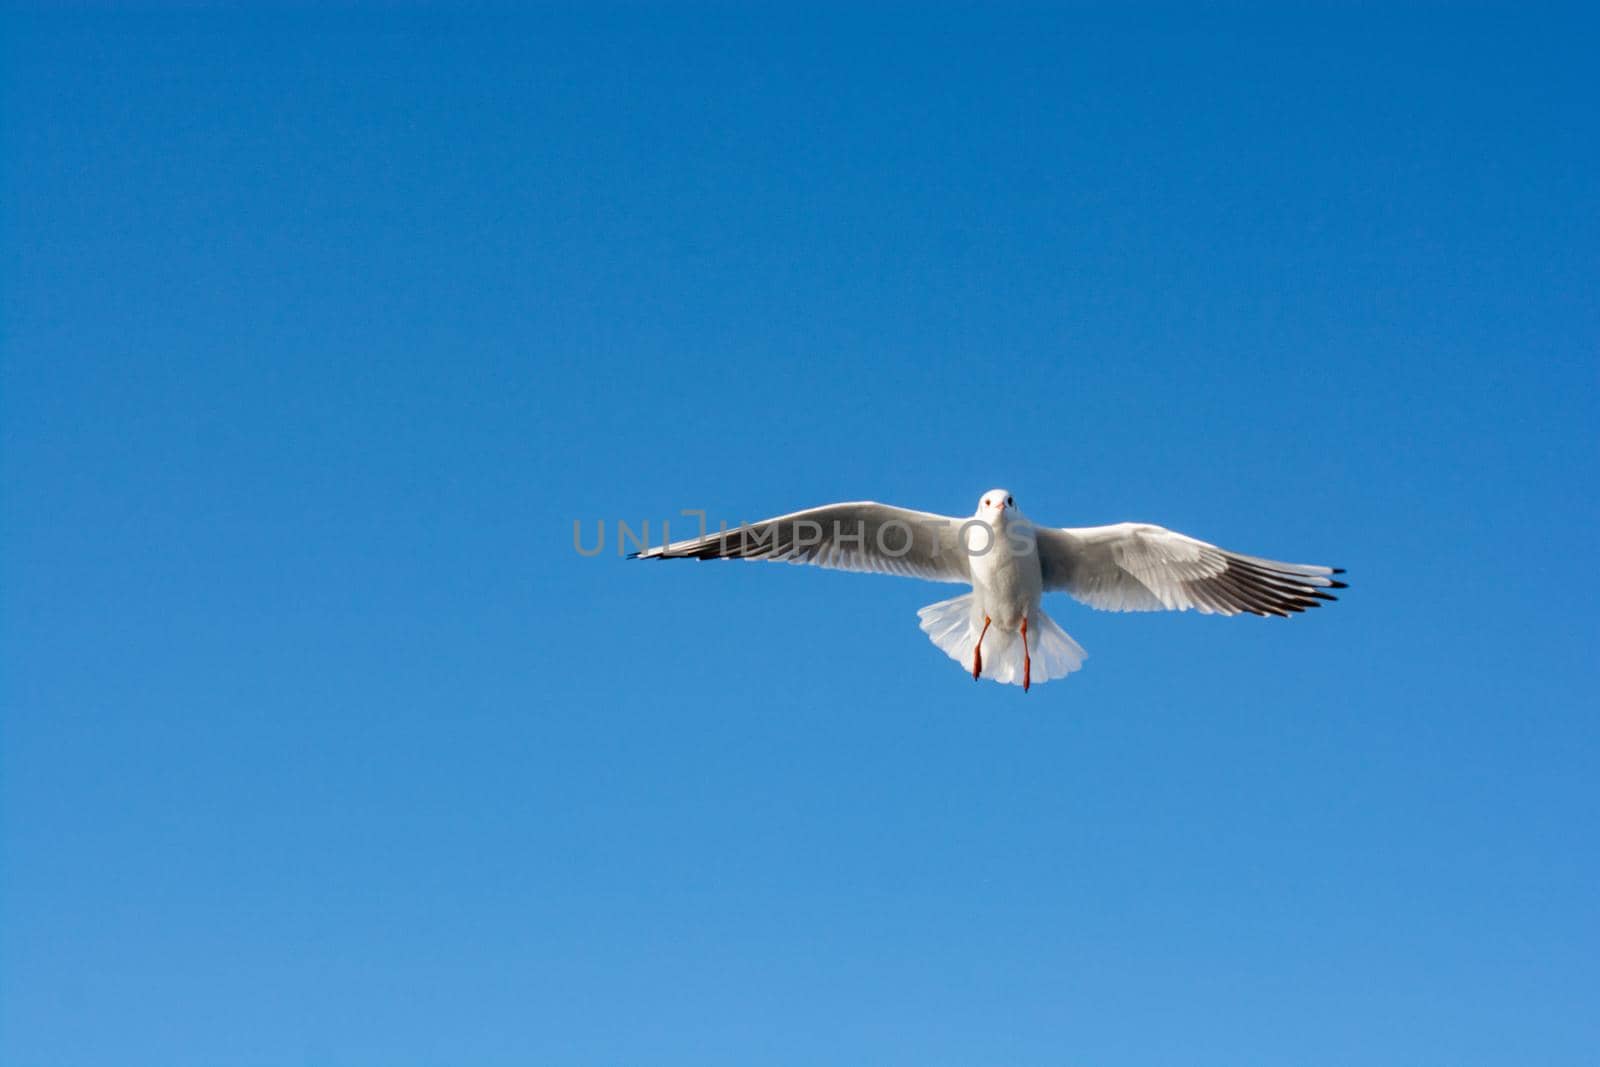 Single seabird seagull  flying in sky with sky as background by berkay